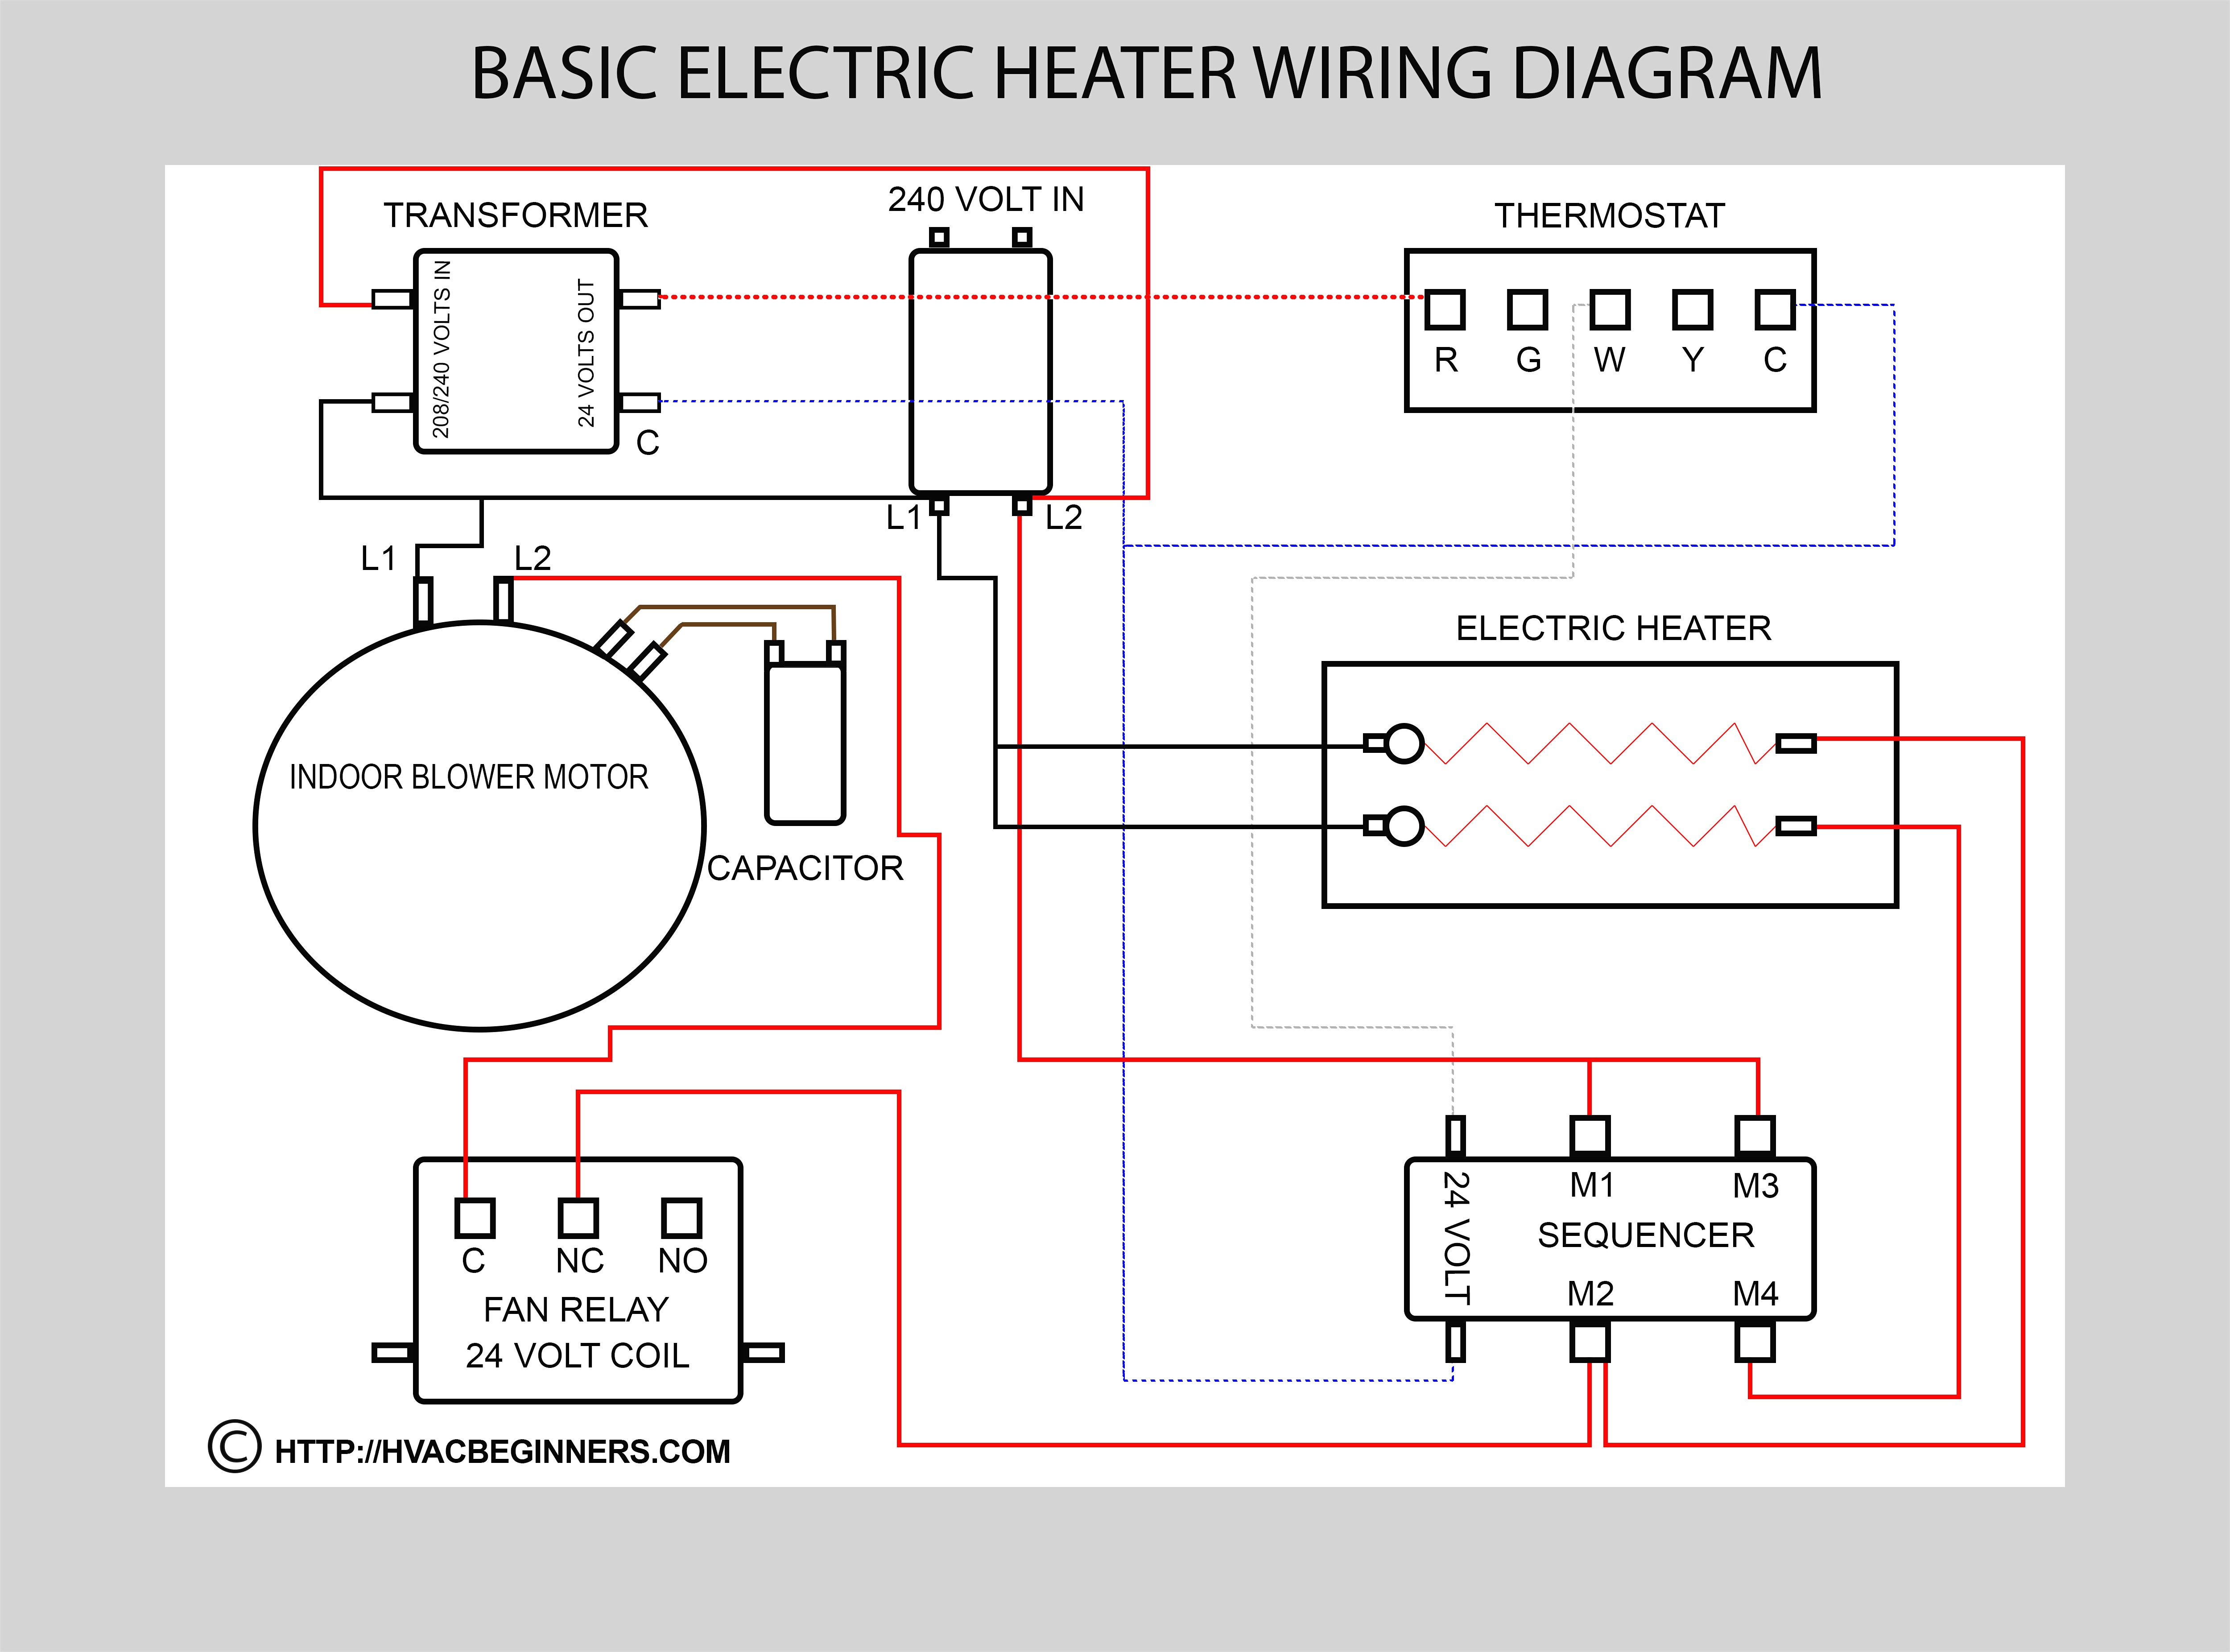 Ac Wire Diagram | Wiring Diagram - Electric Heater Wiring Diagram